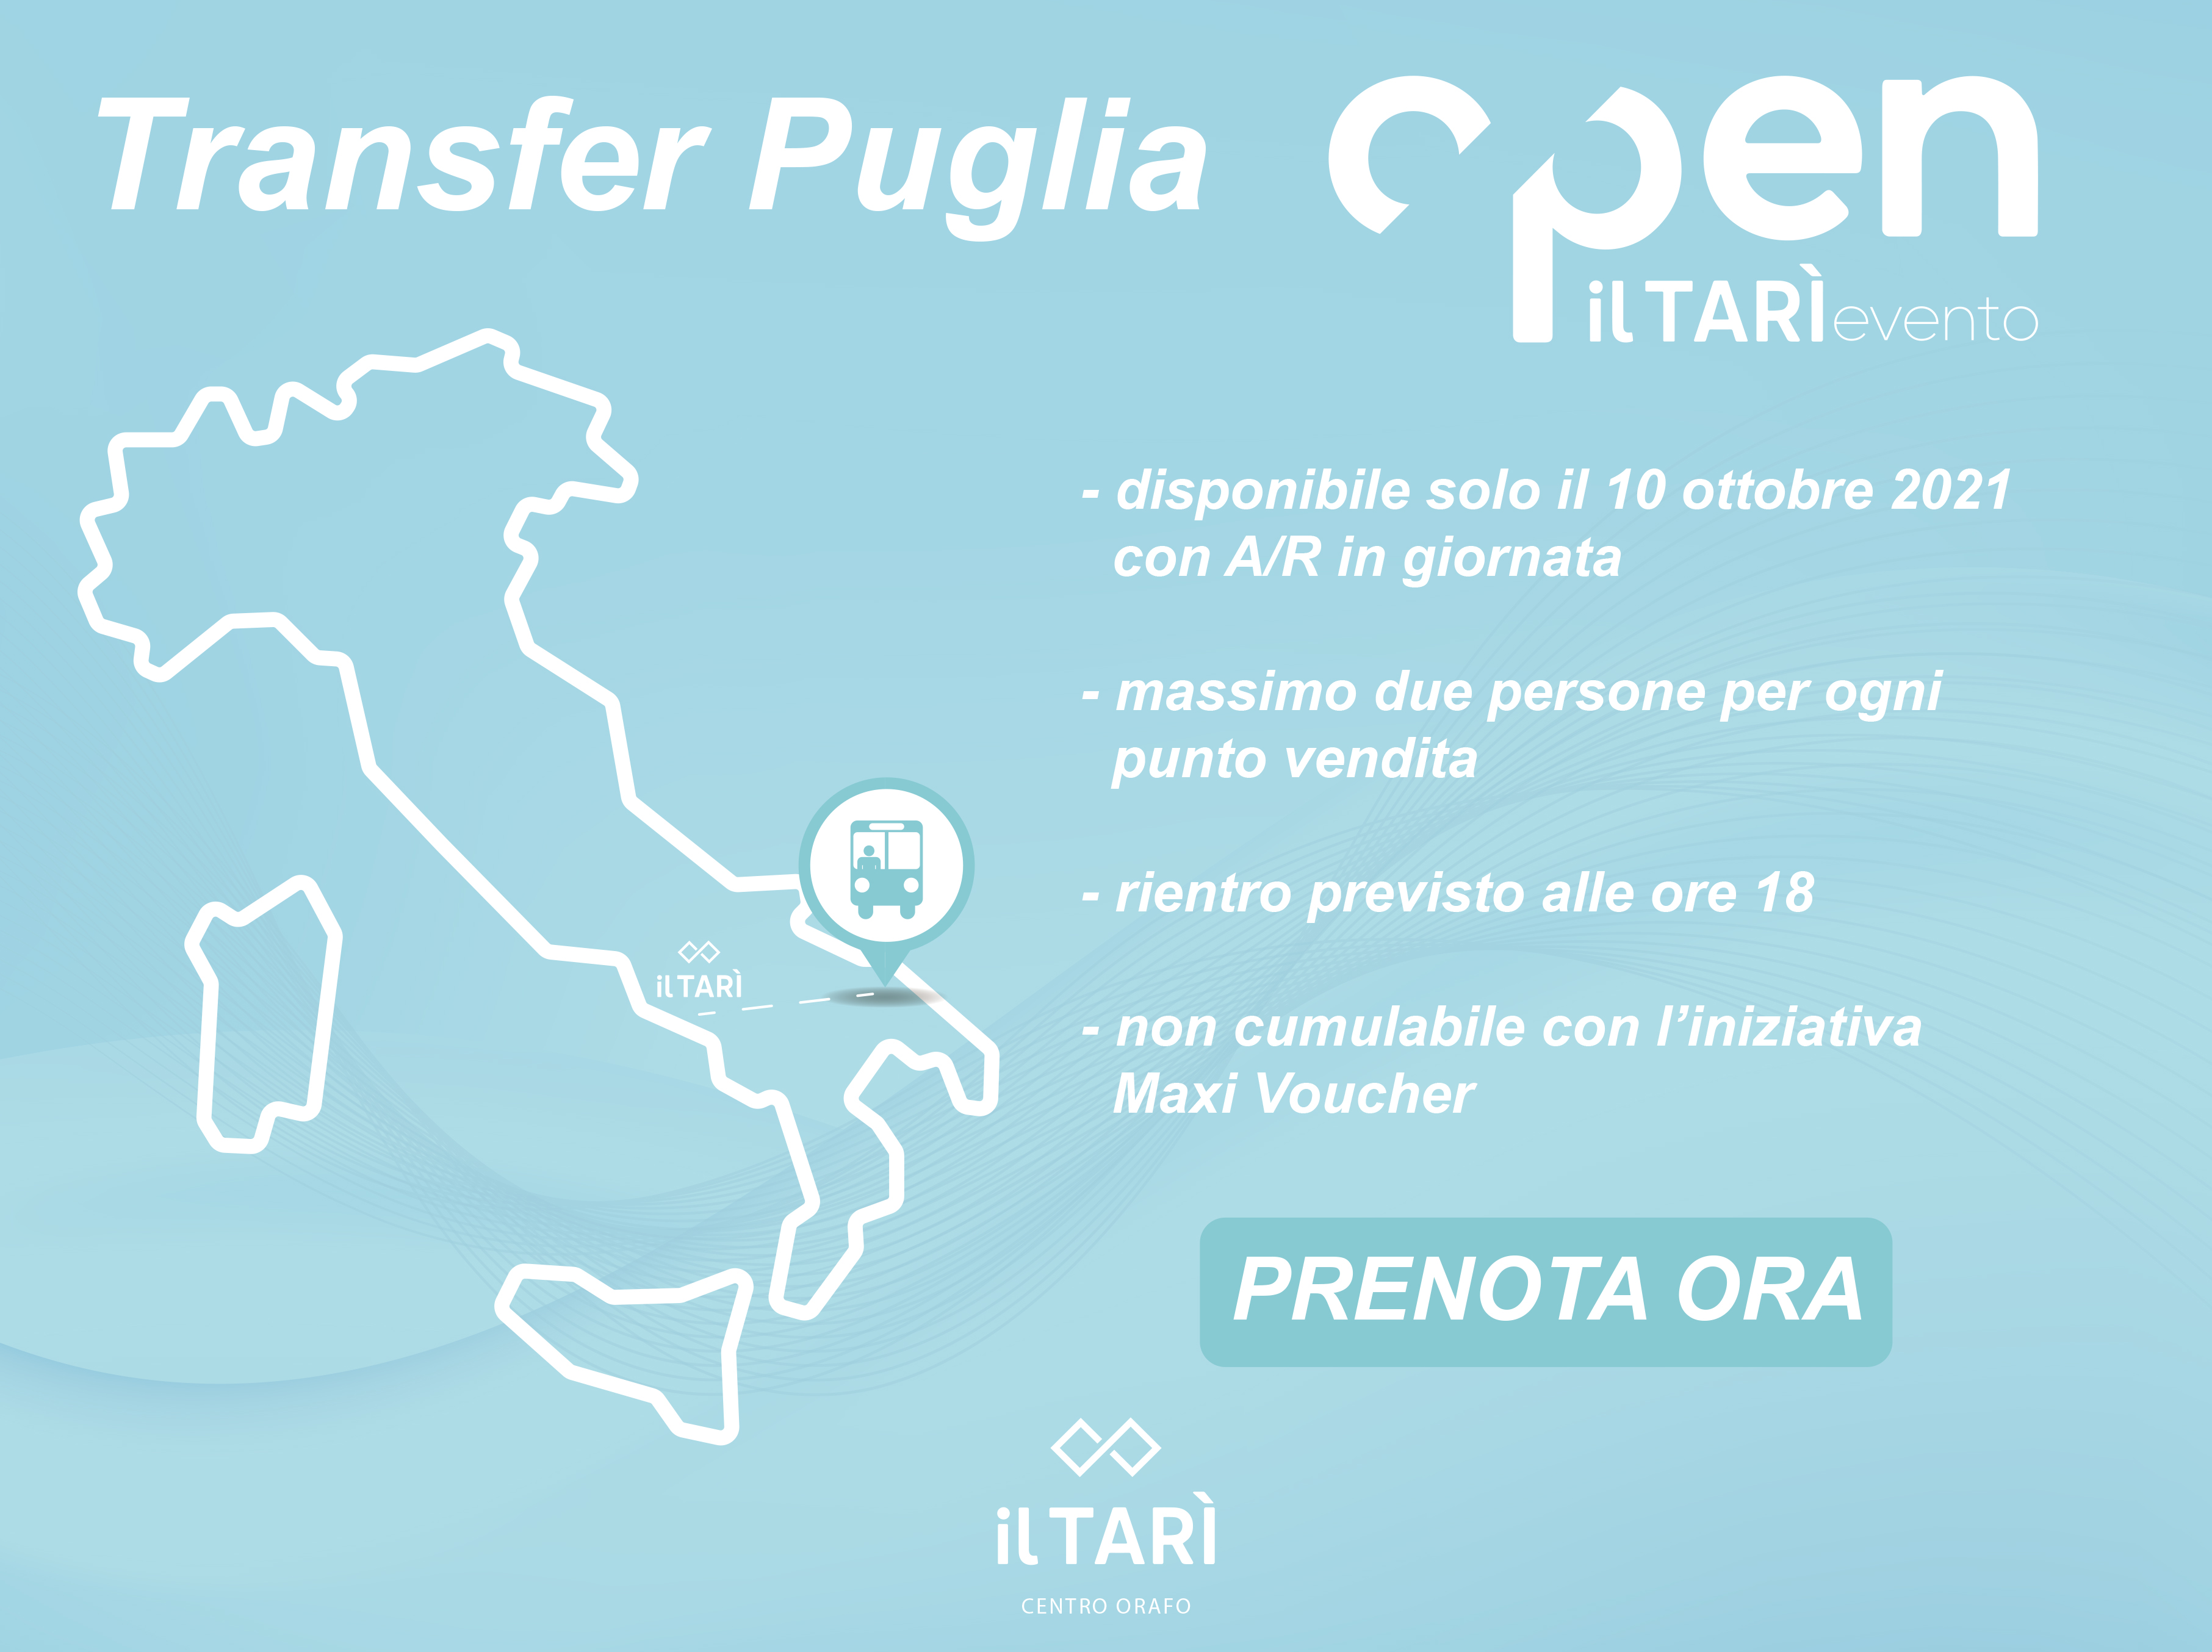 Transfer Puglia - Open! October 2021